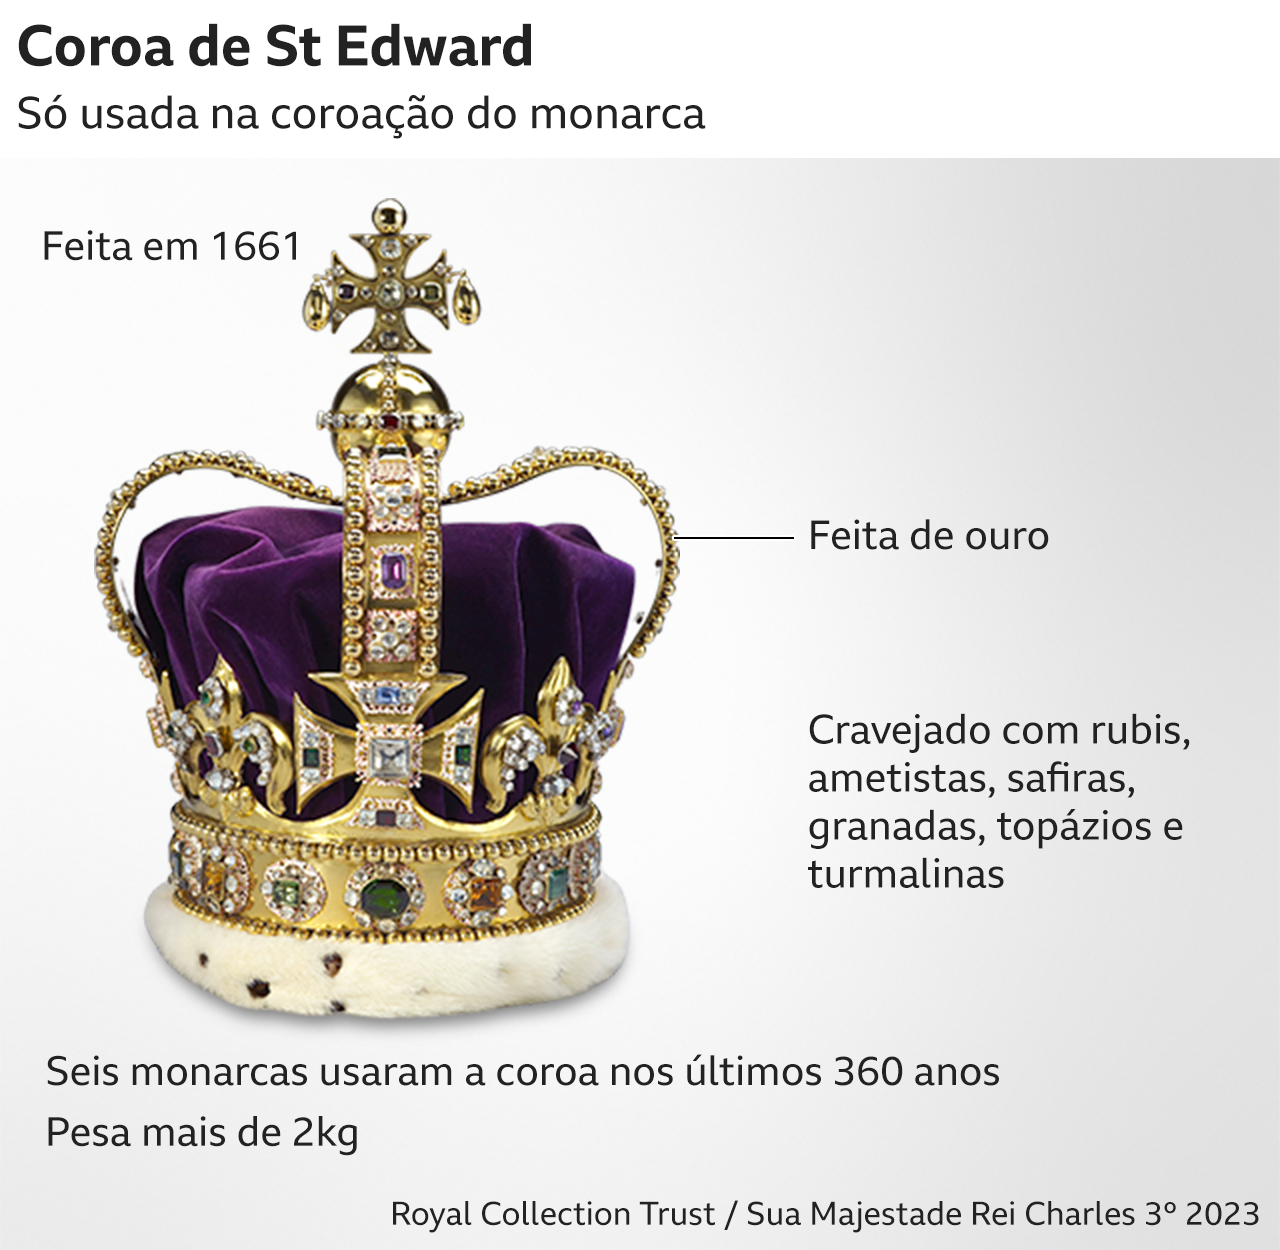 Detalhes da Coroa de St. Edward